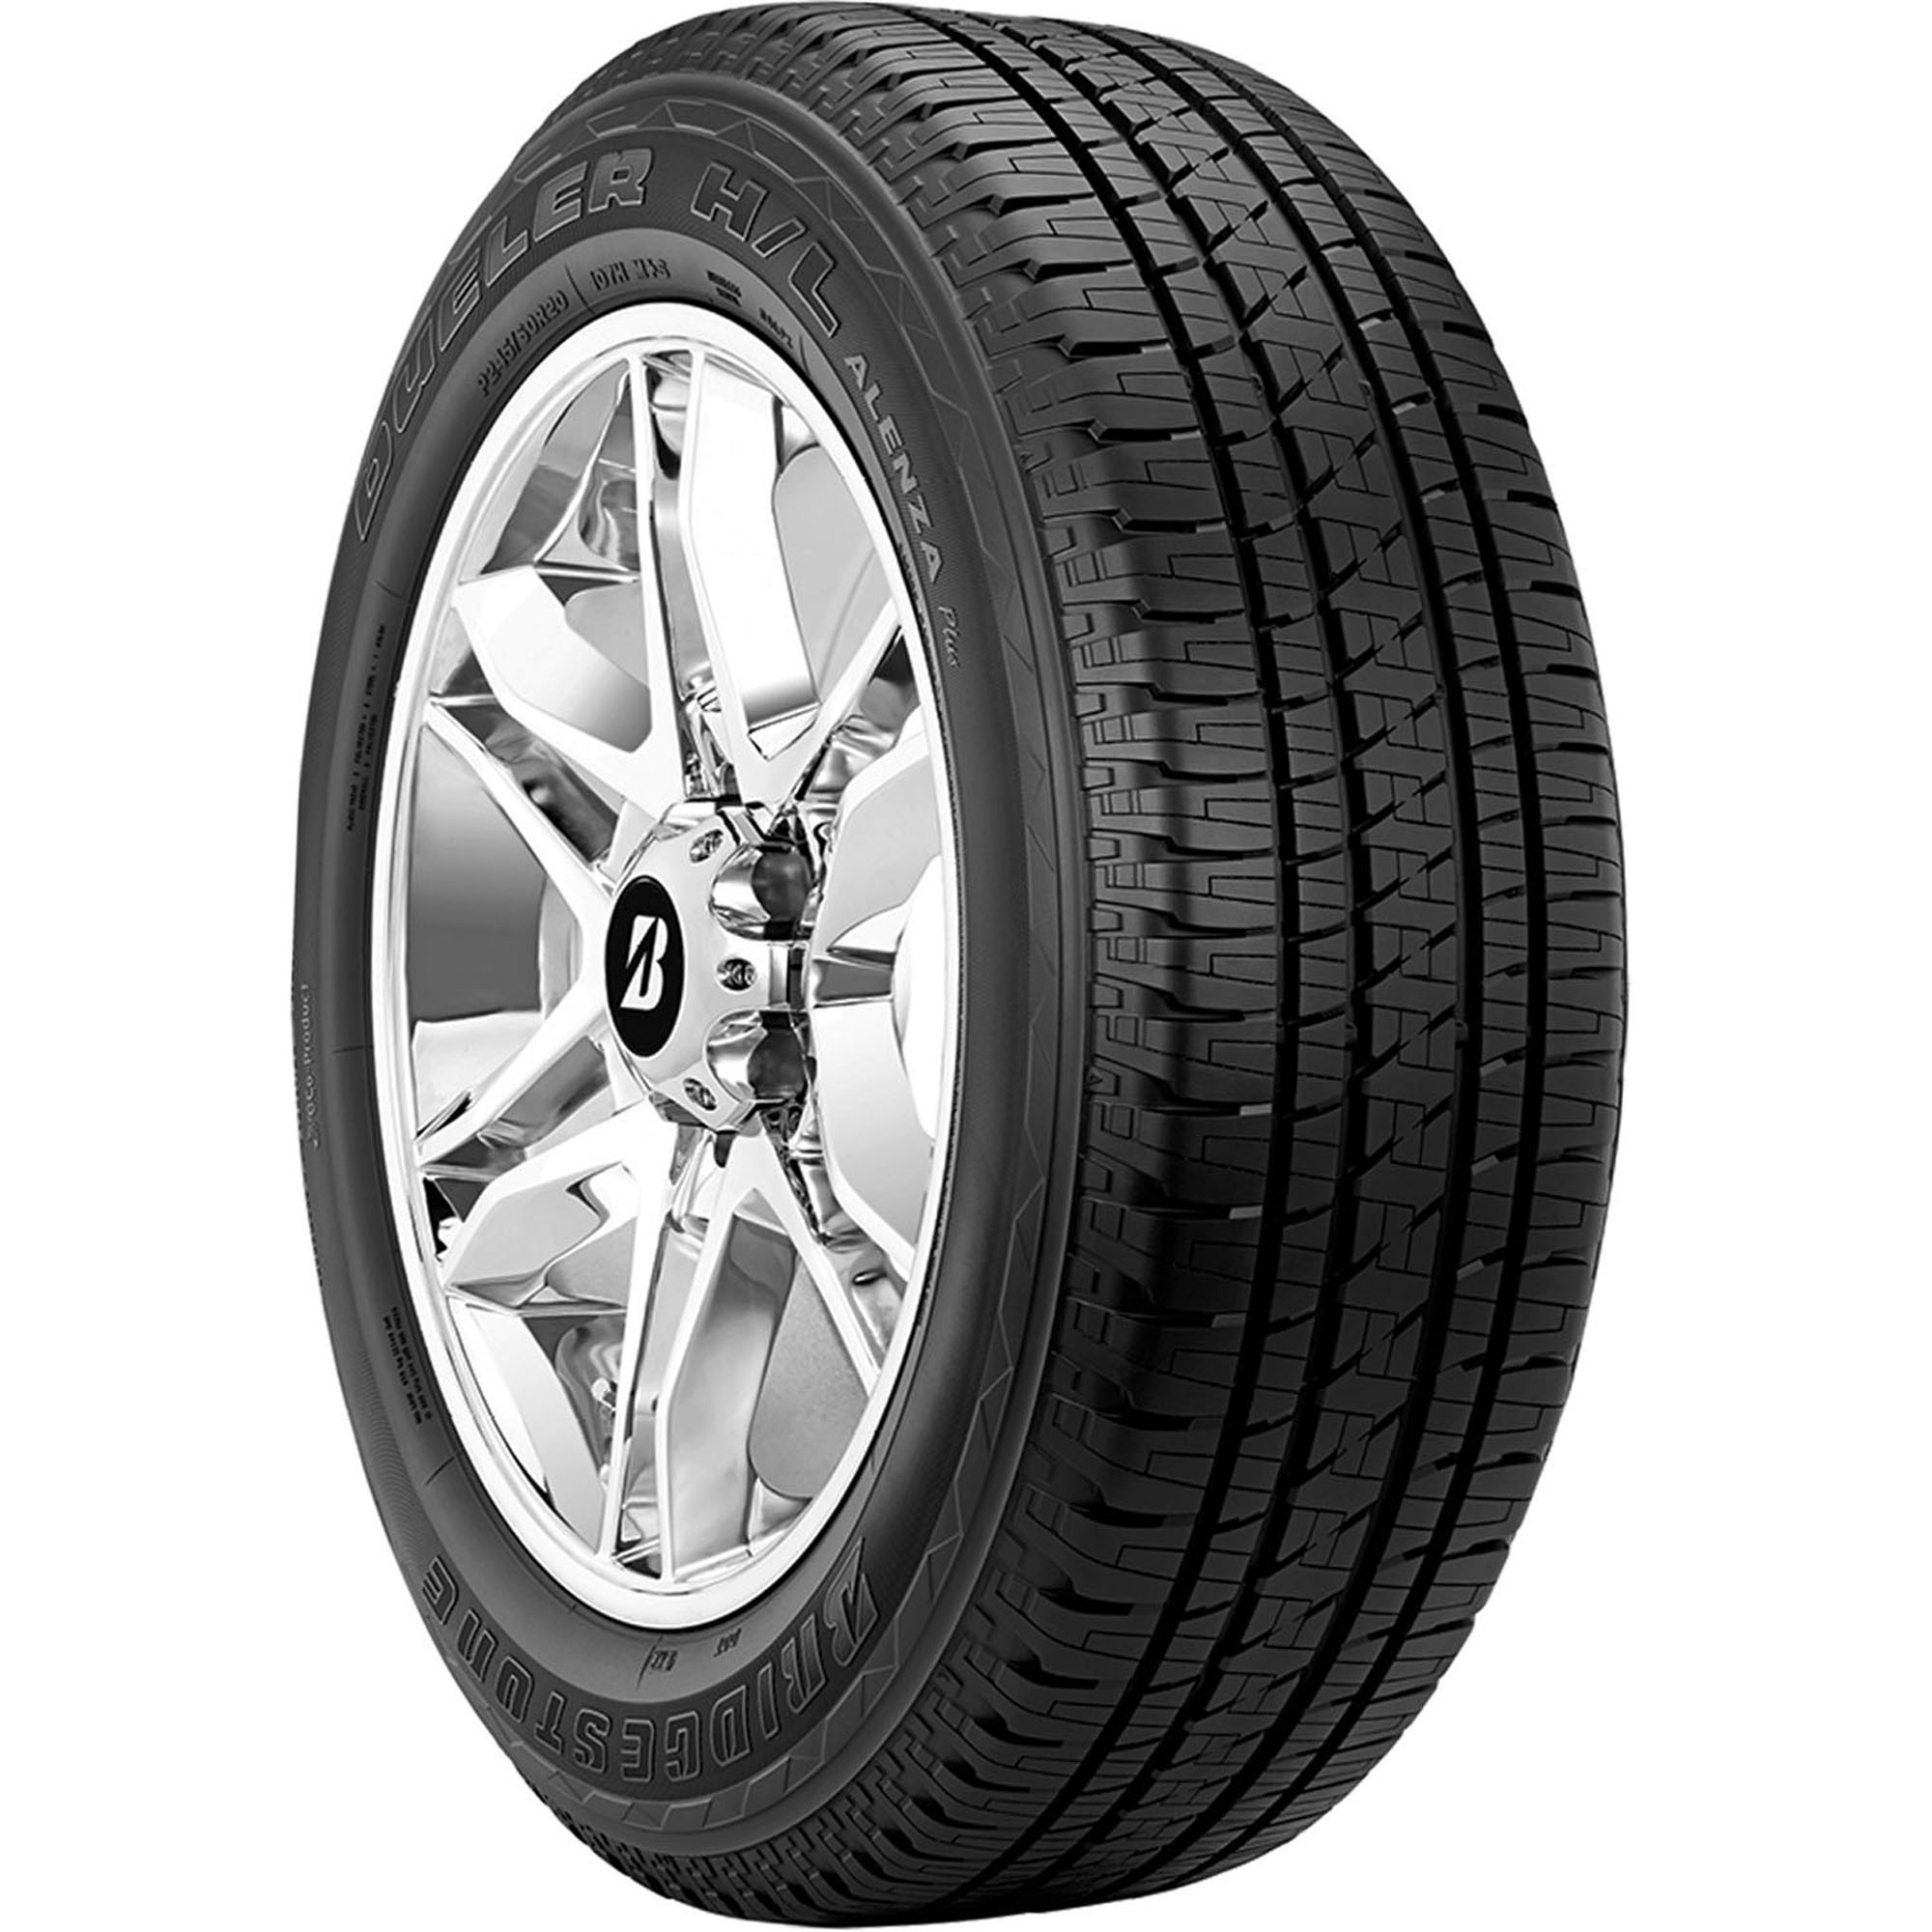 Bridgestone Dueler H/L Alenza Plus All Season P275/55R20 111H SUV/Crossover Tire - image 5 of 6